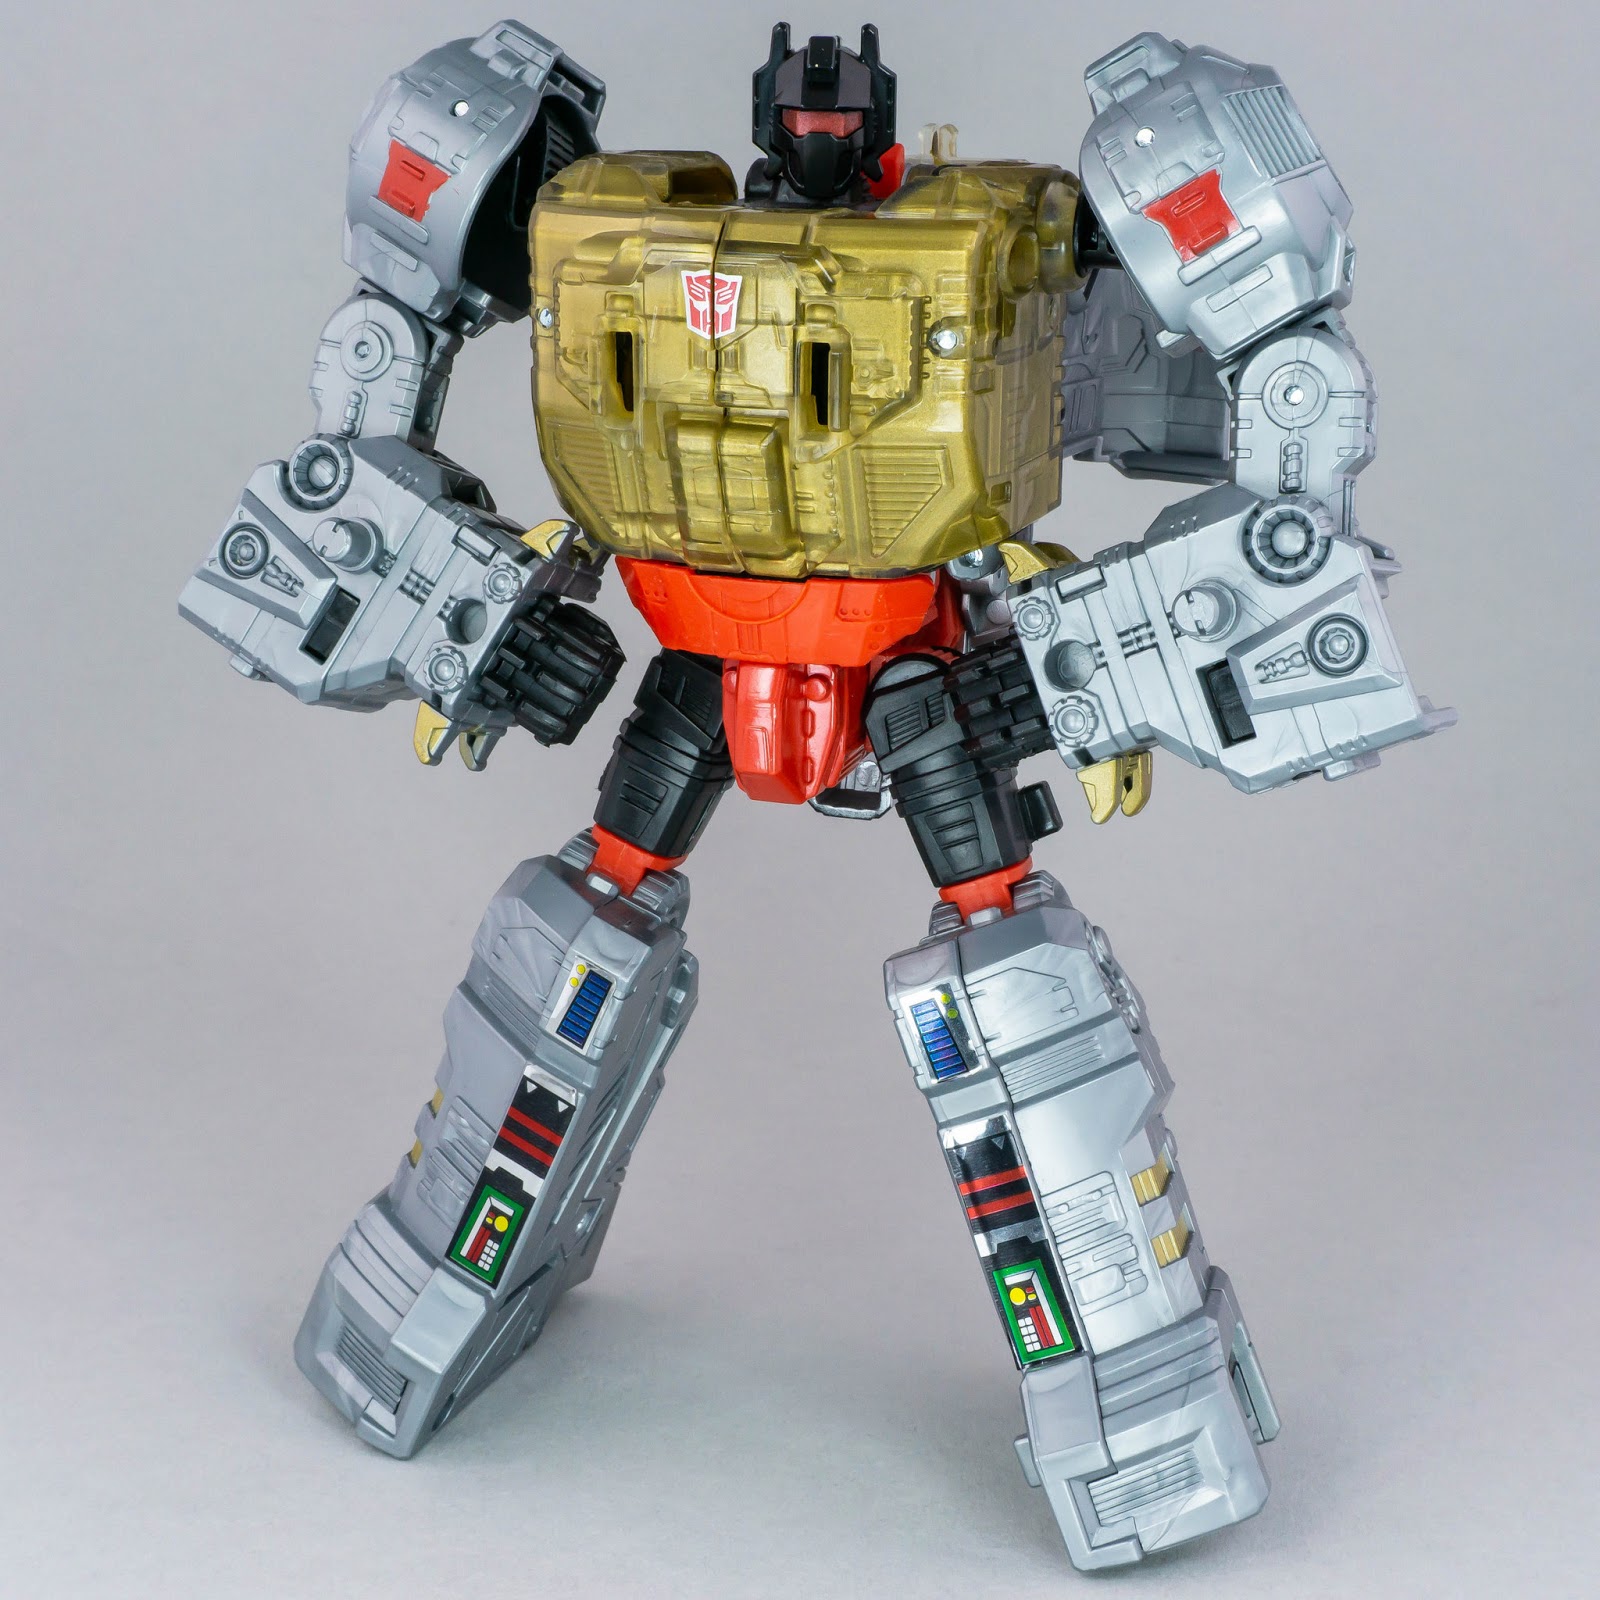 Transformers Power of the Primes Grimlock robot mode "Me Grimlock King"